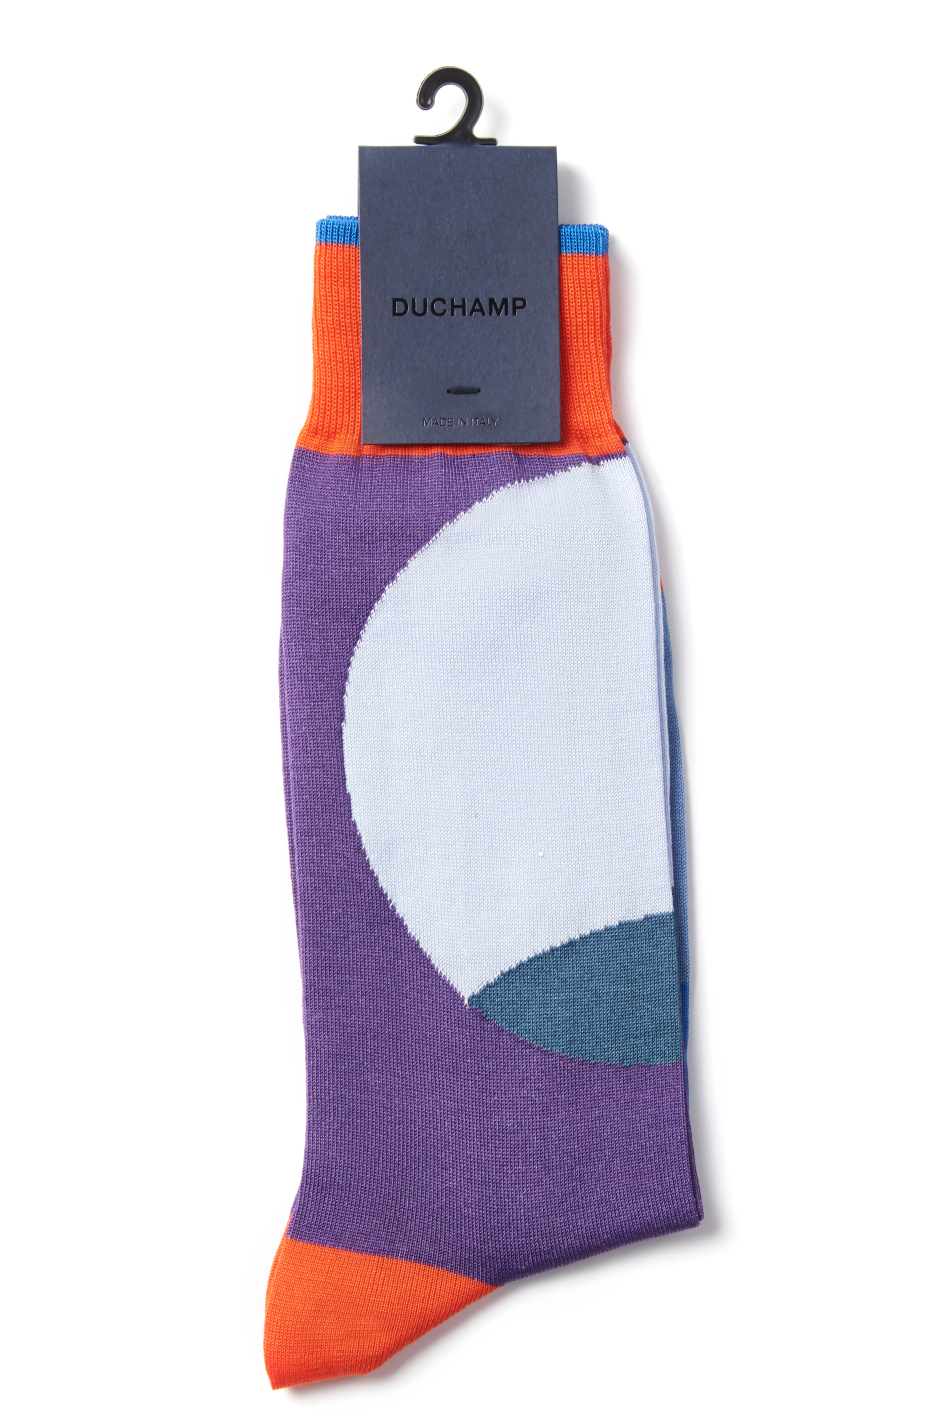 Duchamp Men's Circle Sock